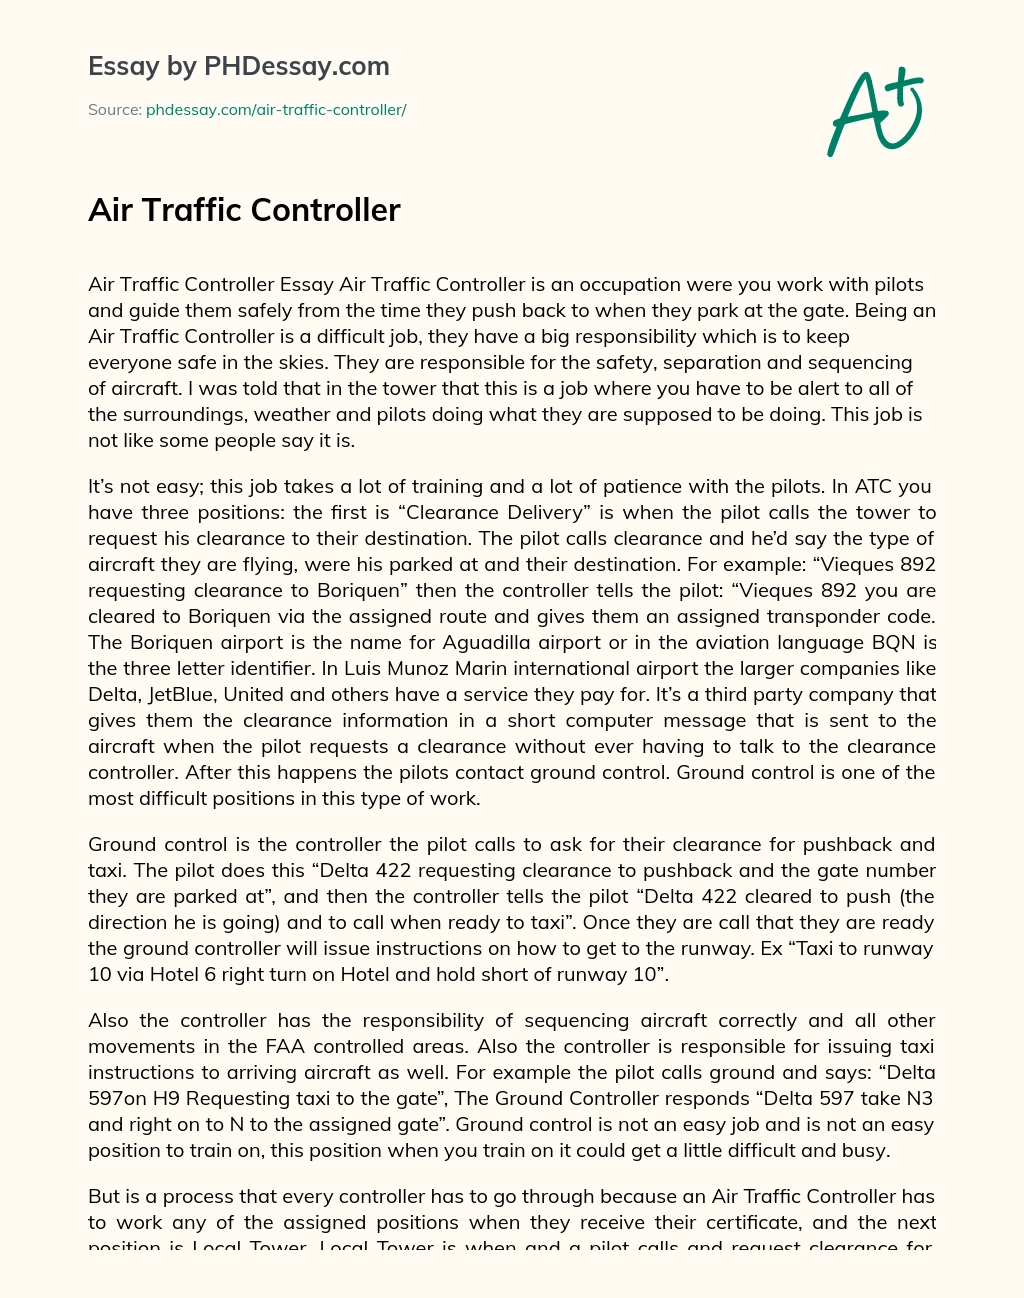 Air Traffic Controller essay